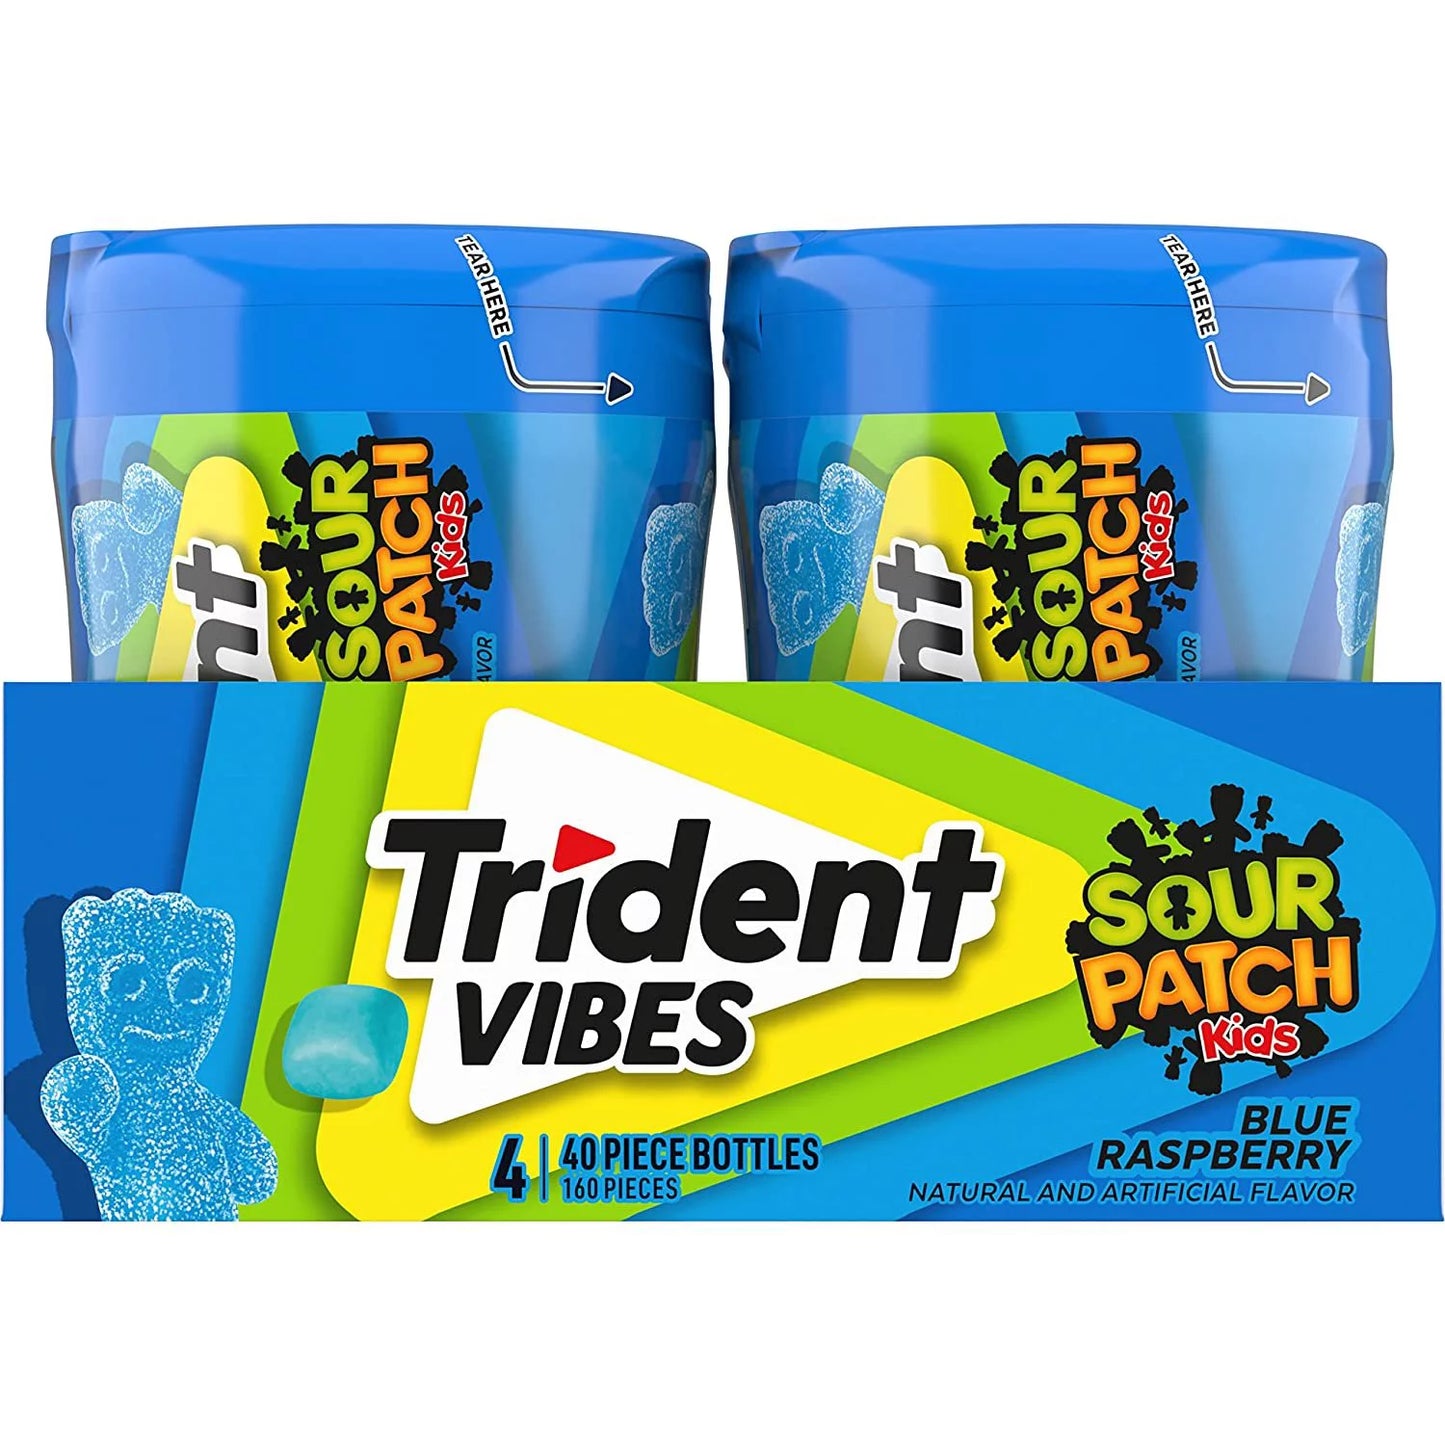 Vibes SOUR PATCH KIDS Blue Raspberry Sugar Free Gum, 4-40 Piece Bottles 160 Total Pieces